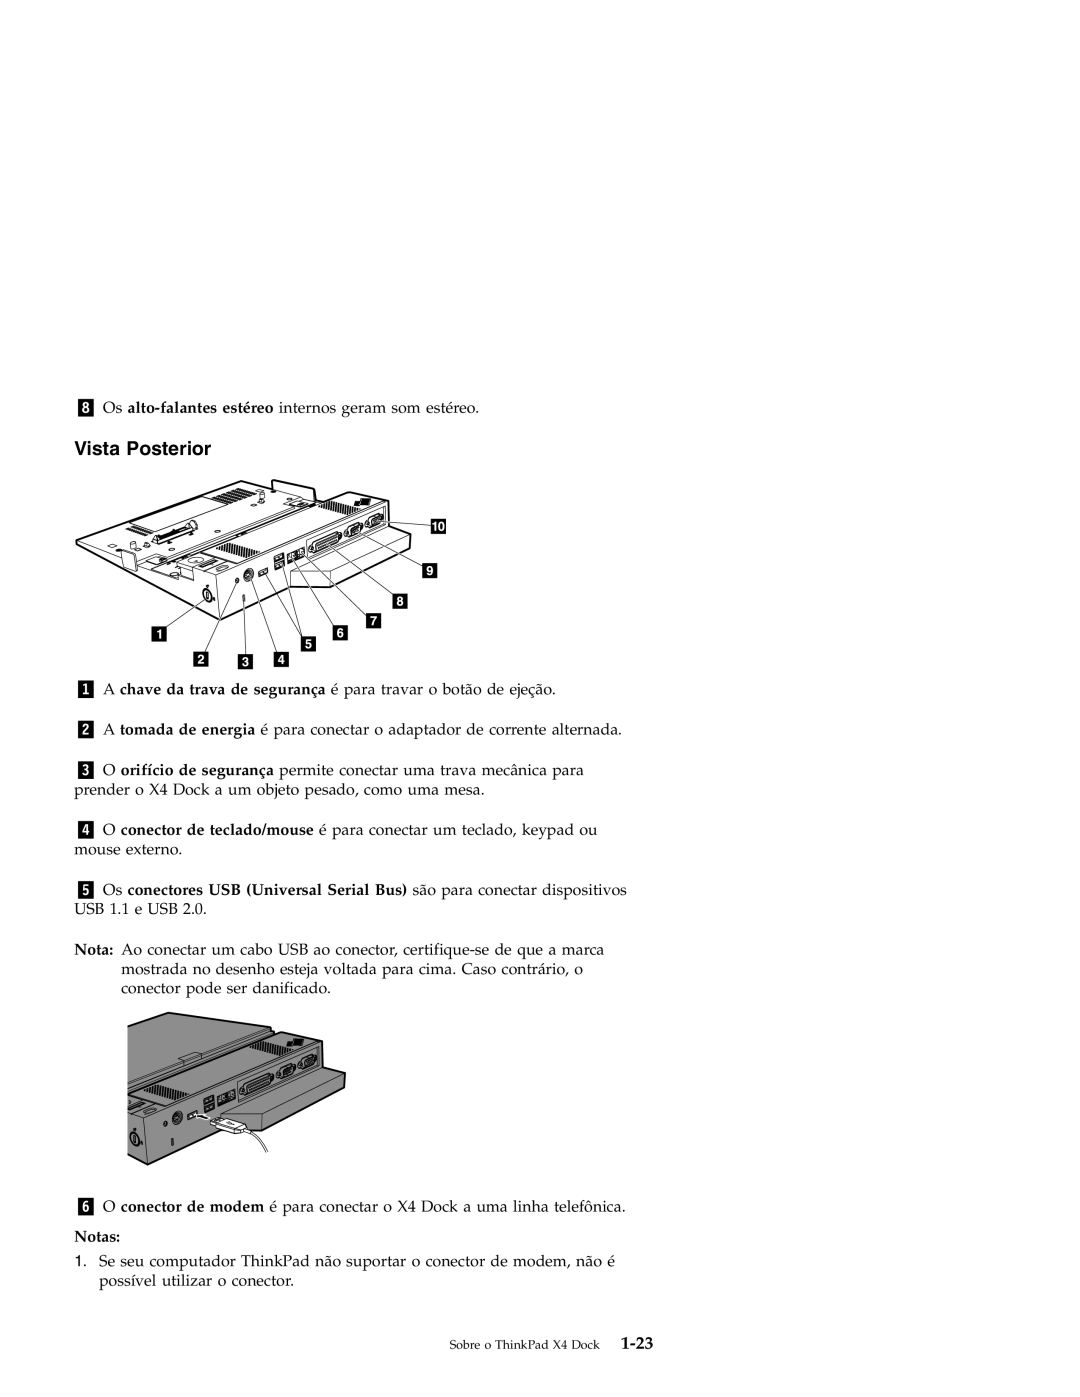 IBM X4 manual Vista Posterior, Notas 